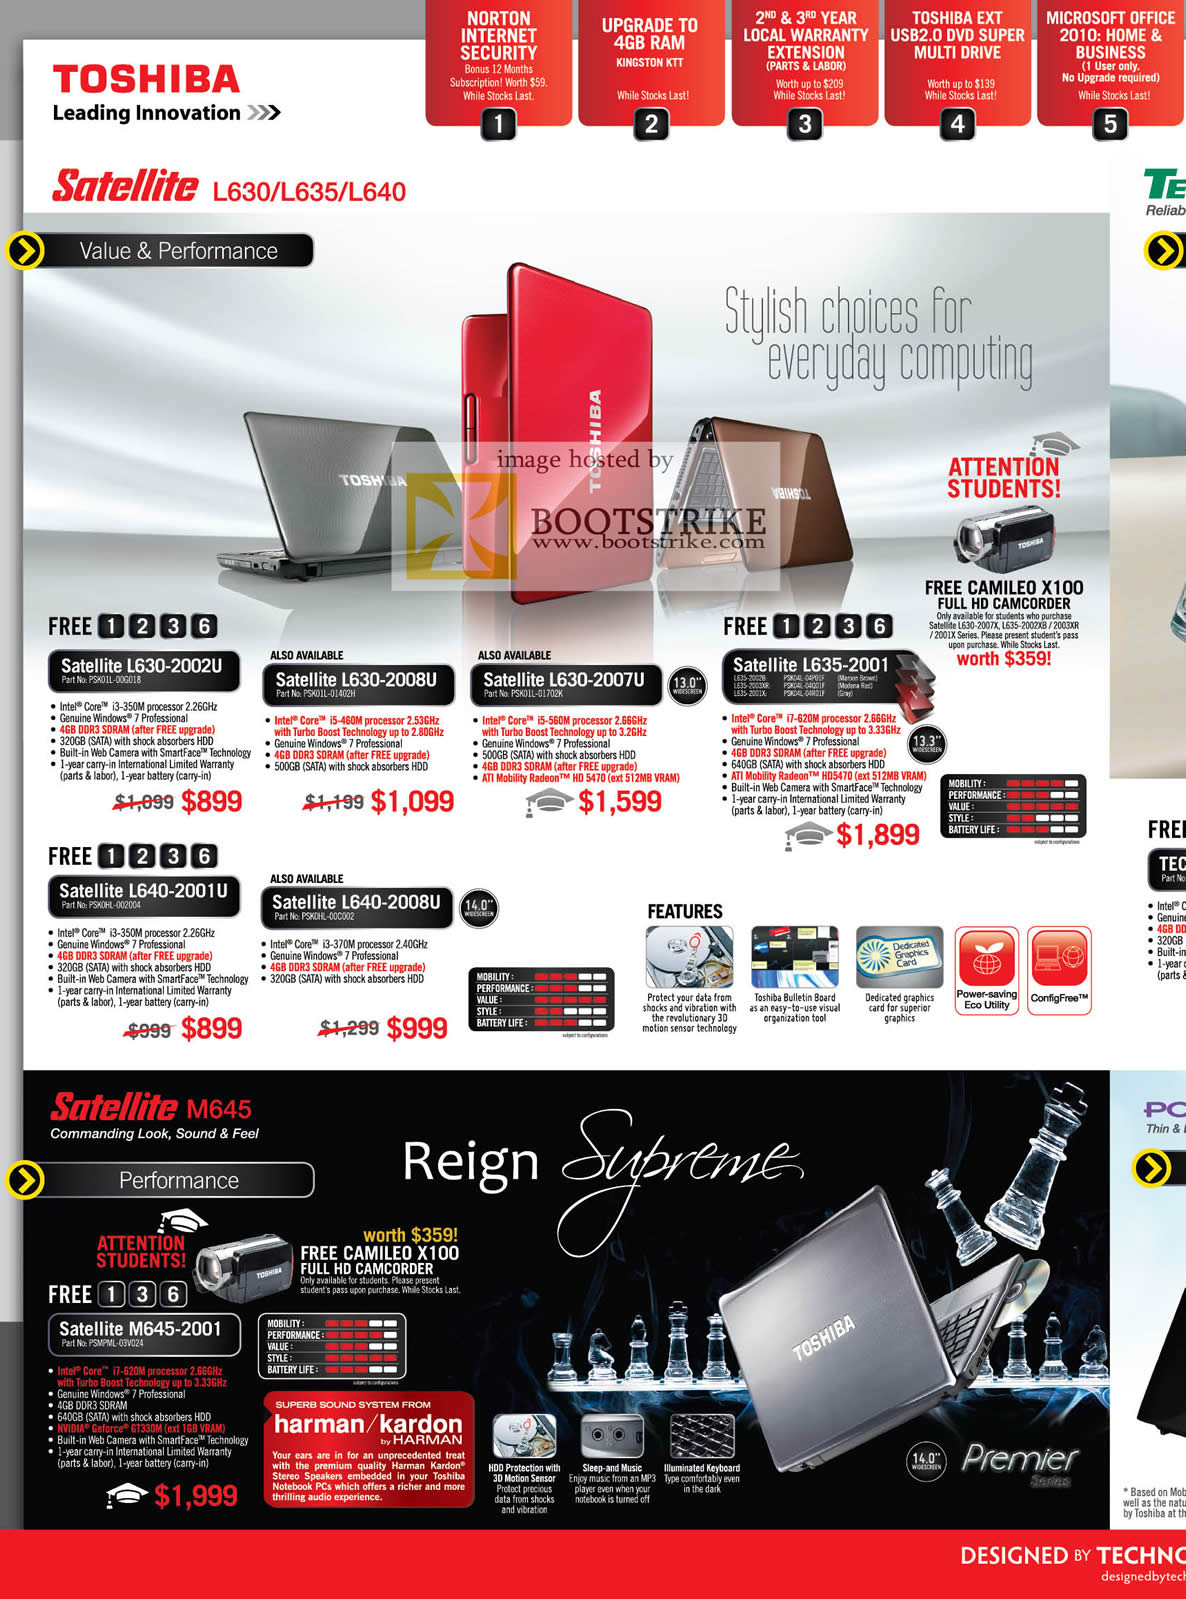 IT Show 2011 price list image brochure of Toshiba Notebooks Satellite L630 2002U 2008U 2007U L635-2001 L640 2001U 2008U M645-2001